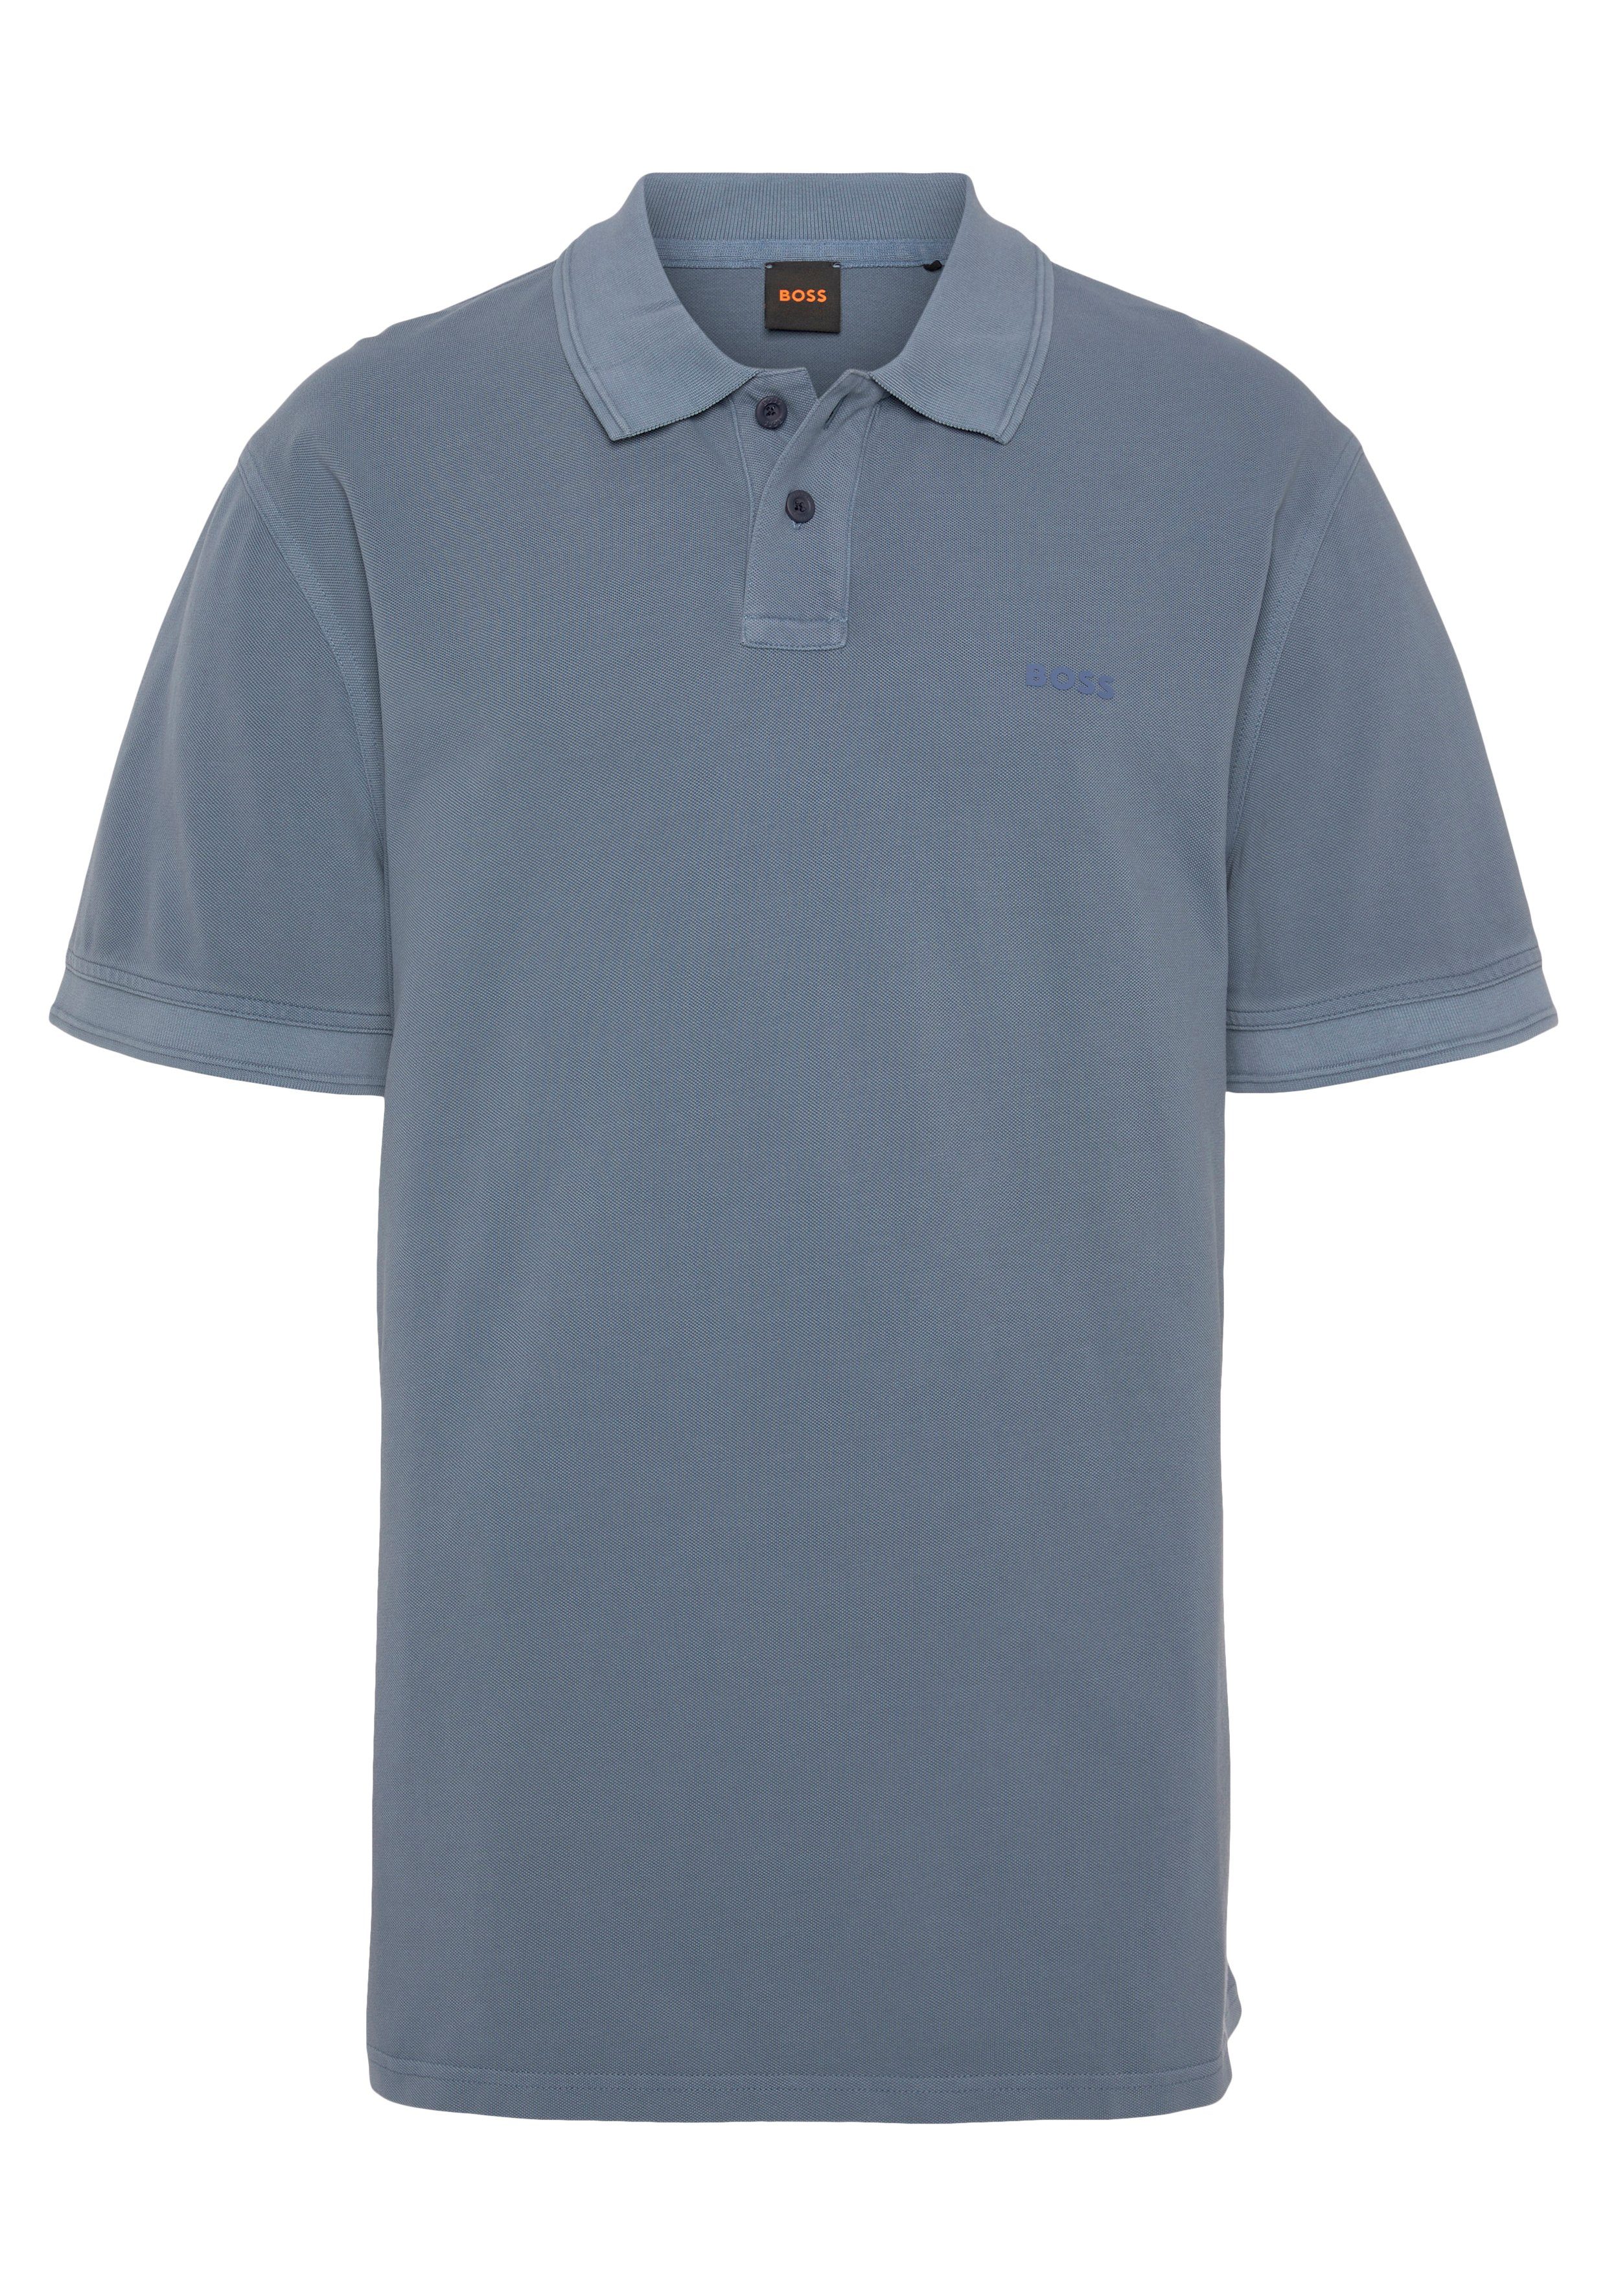 BOSS ORANGE Poloshirt Prime mit Knopfleiste 459 Light/Pastel Blue